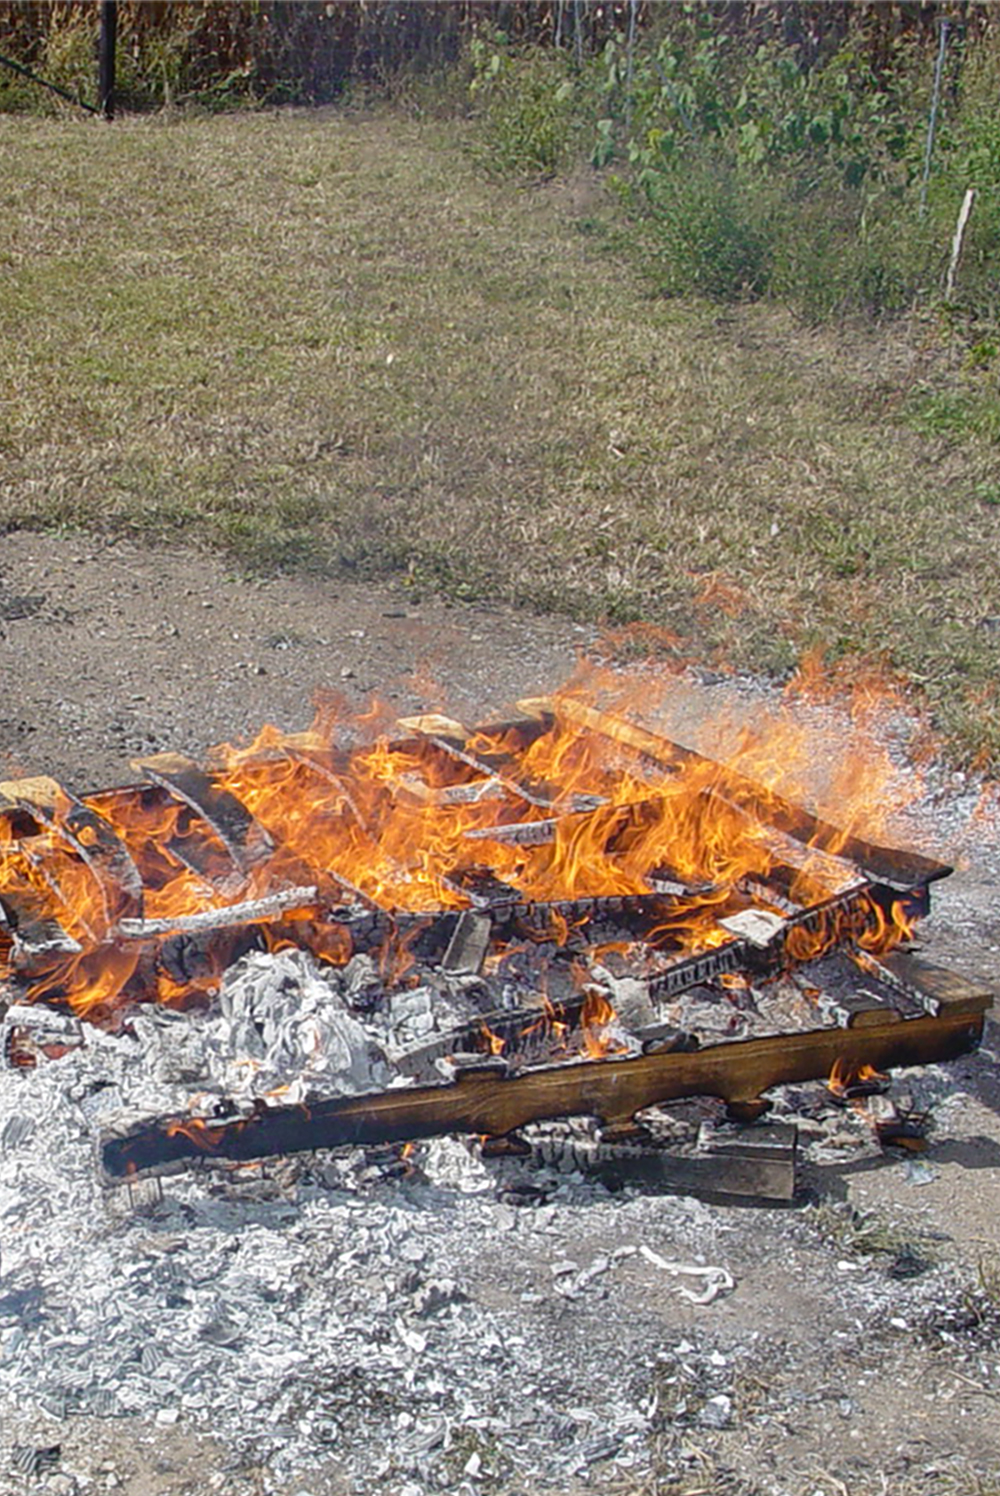 Burning trash, like this pallet, creates significant health risks  |  Iowa DNR